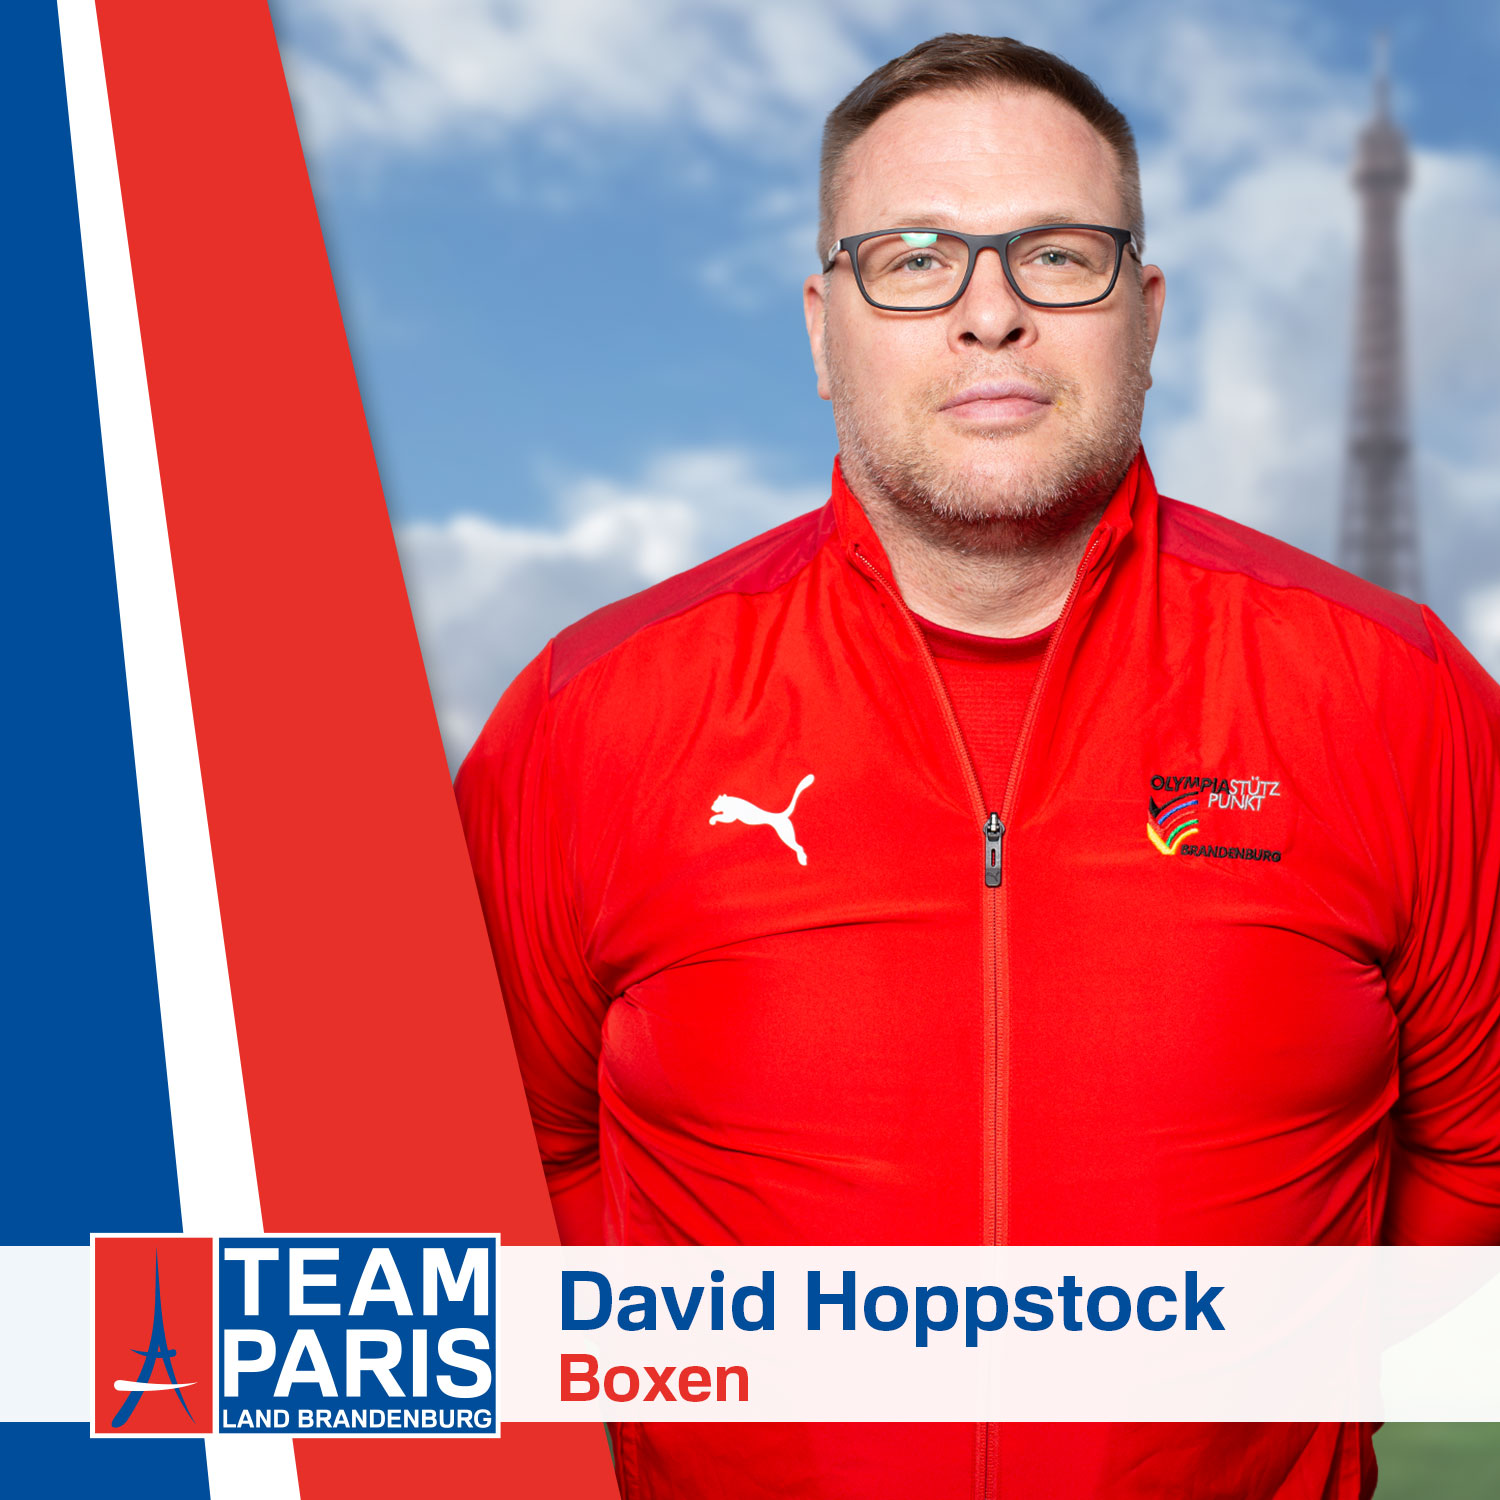 David Hoppstock